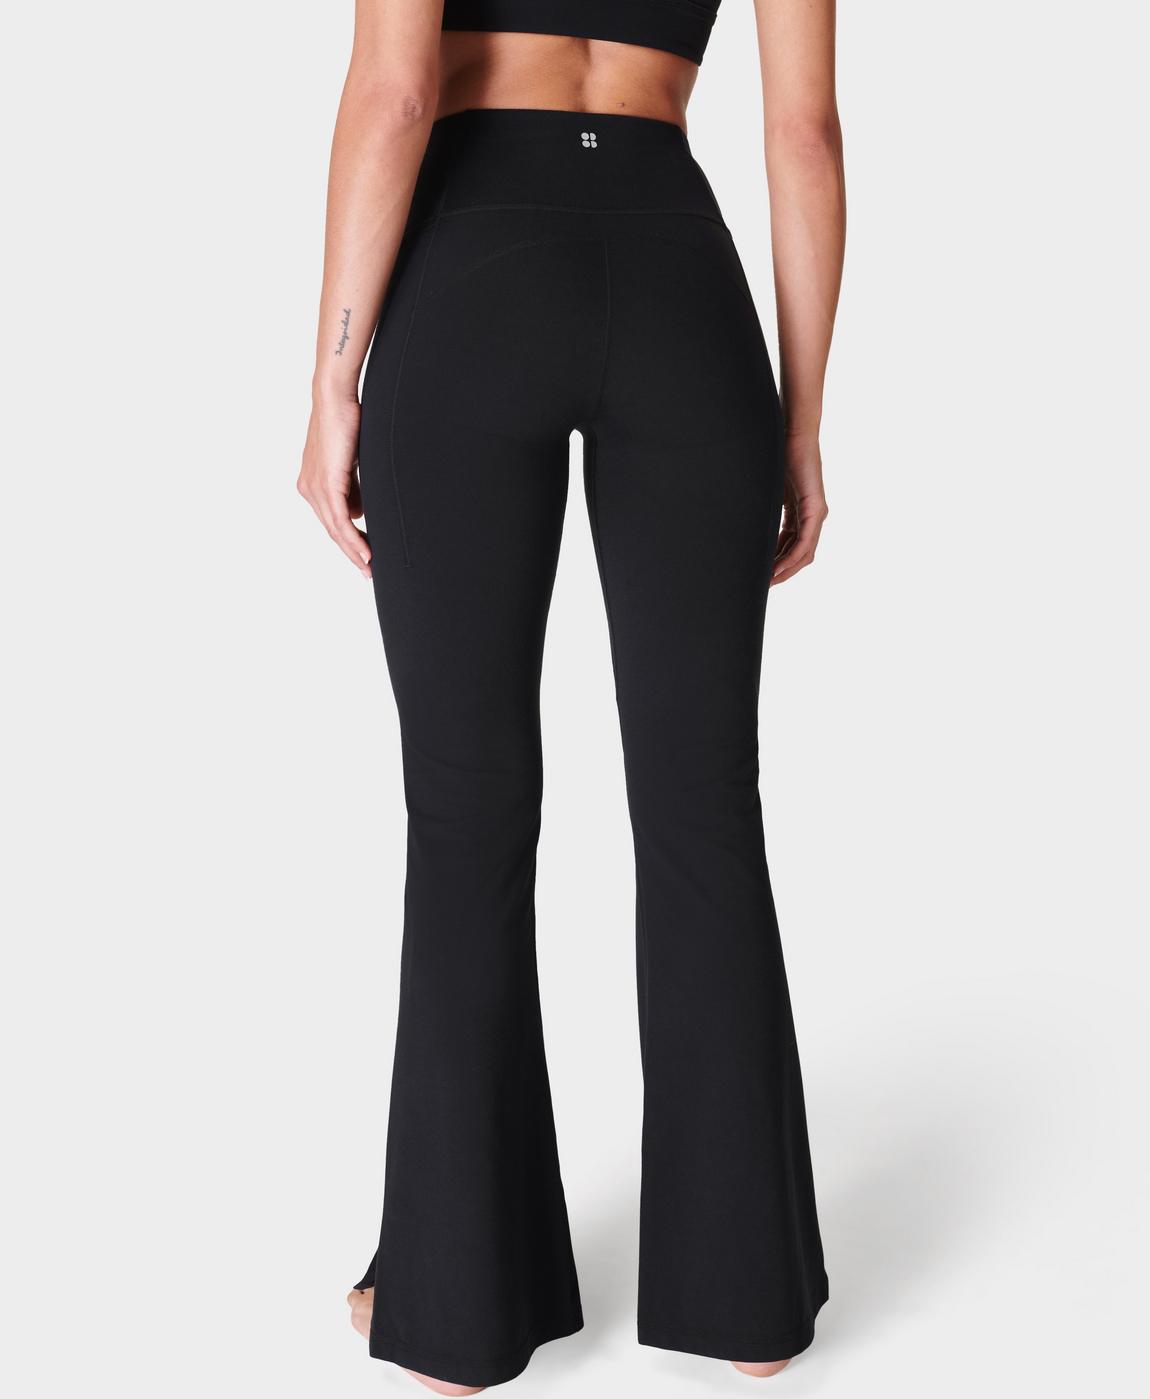 Super Soft Flare Yoga Pants- black, Women's Pants